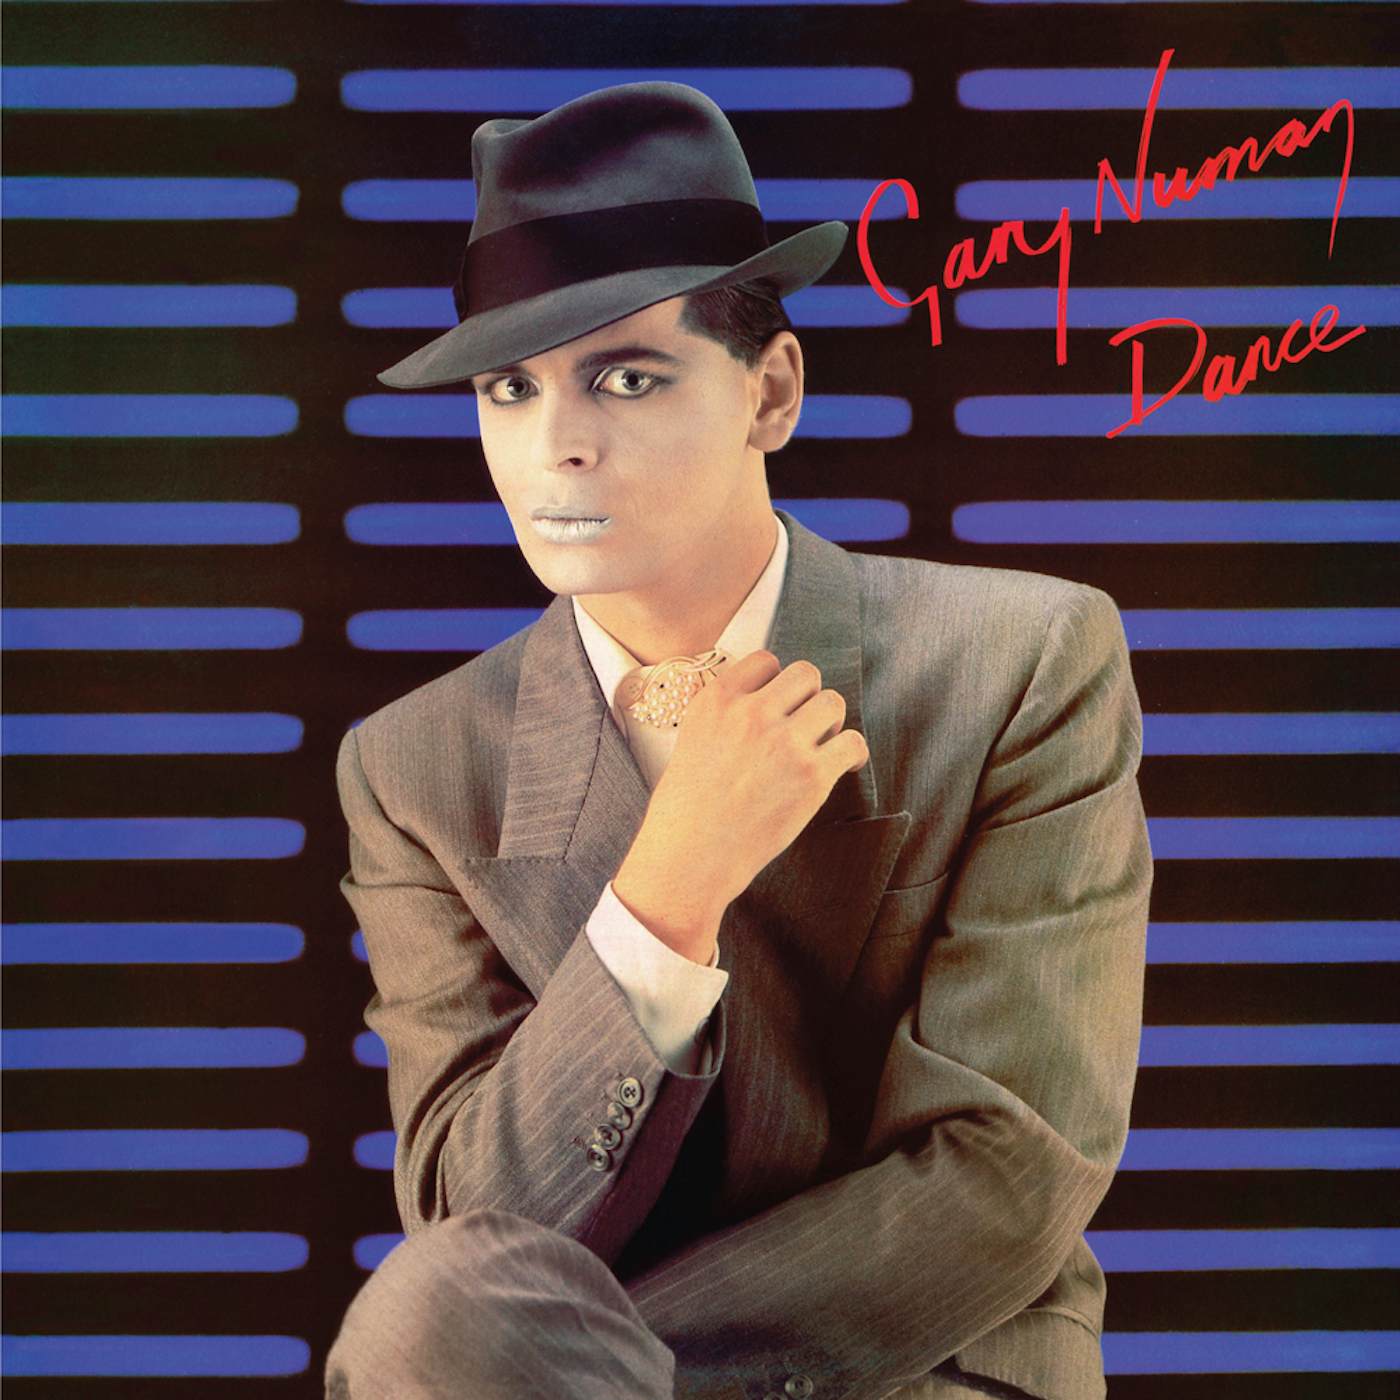 Gary Numan Dance Vinyl Record